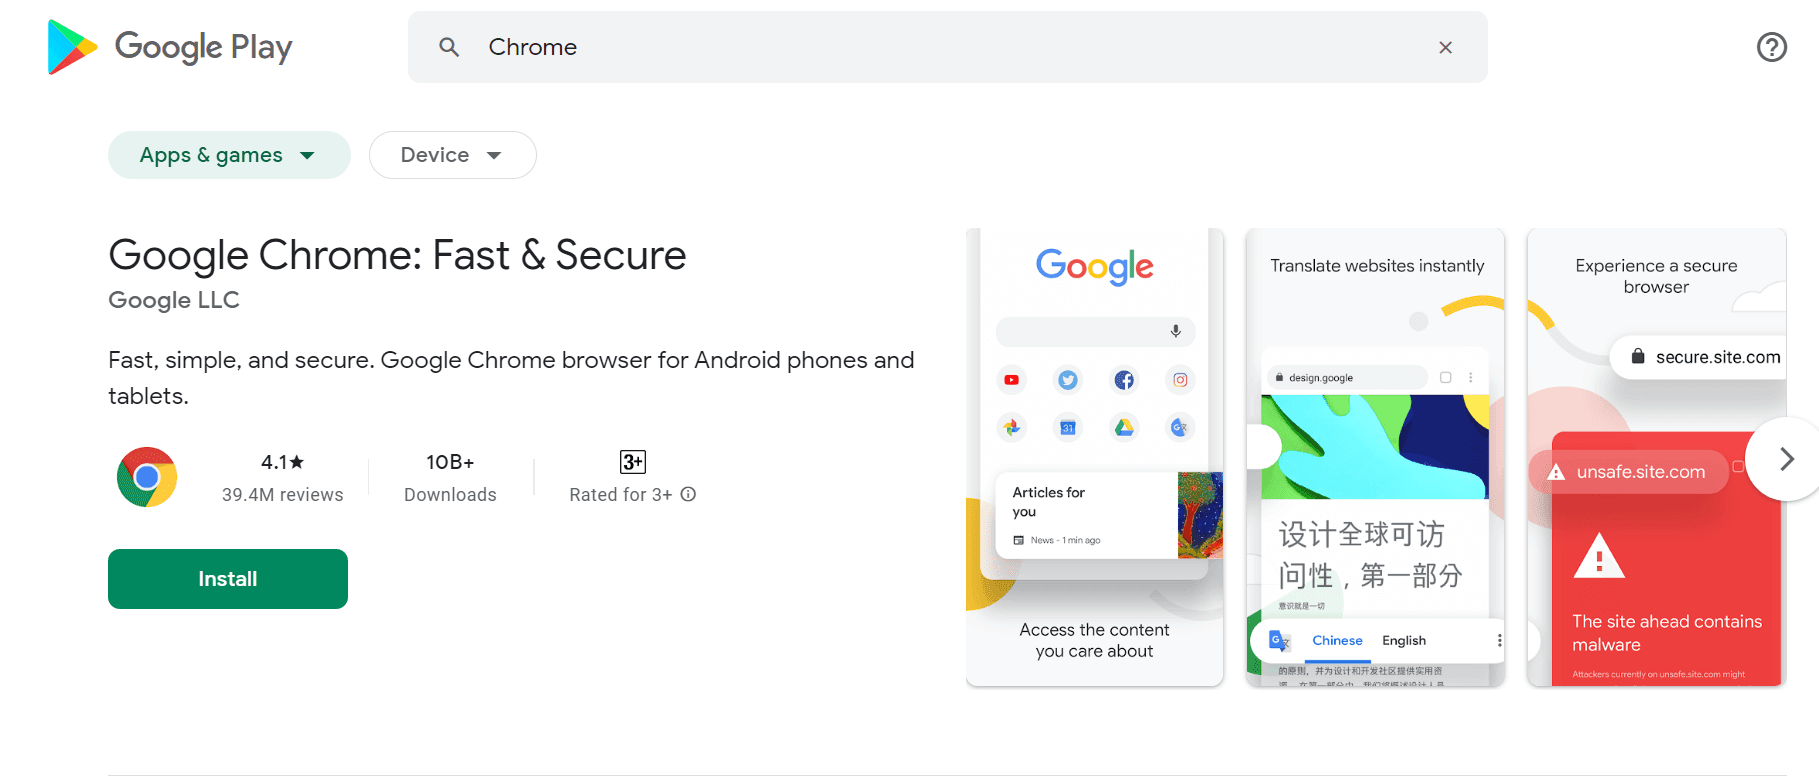 Chrome consists of 10 billion+ lifetime installs